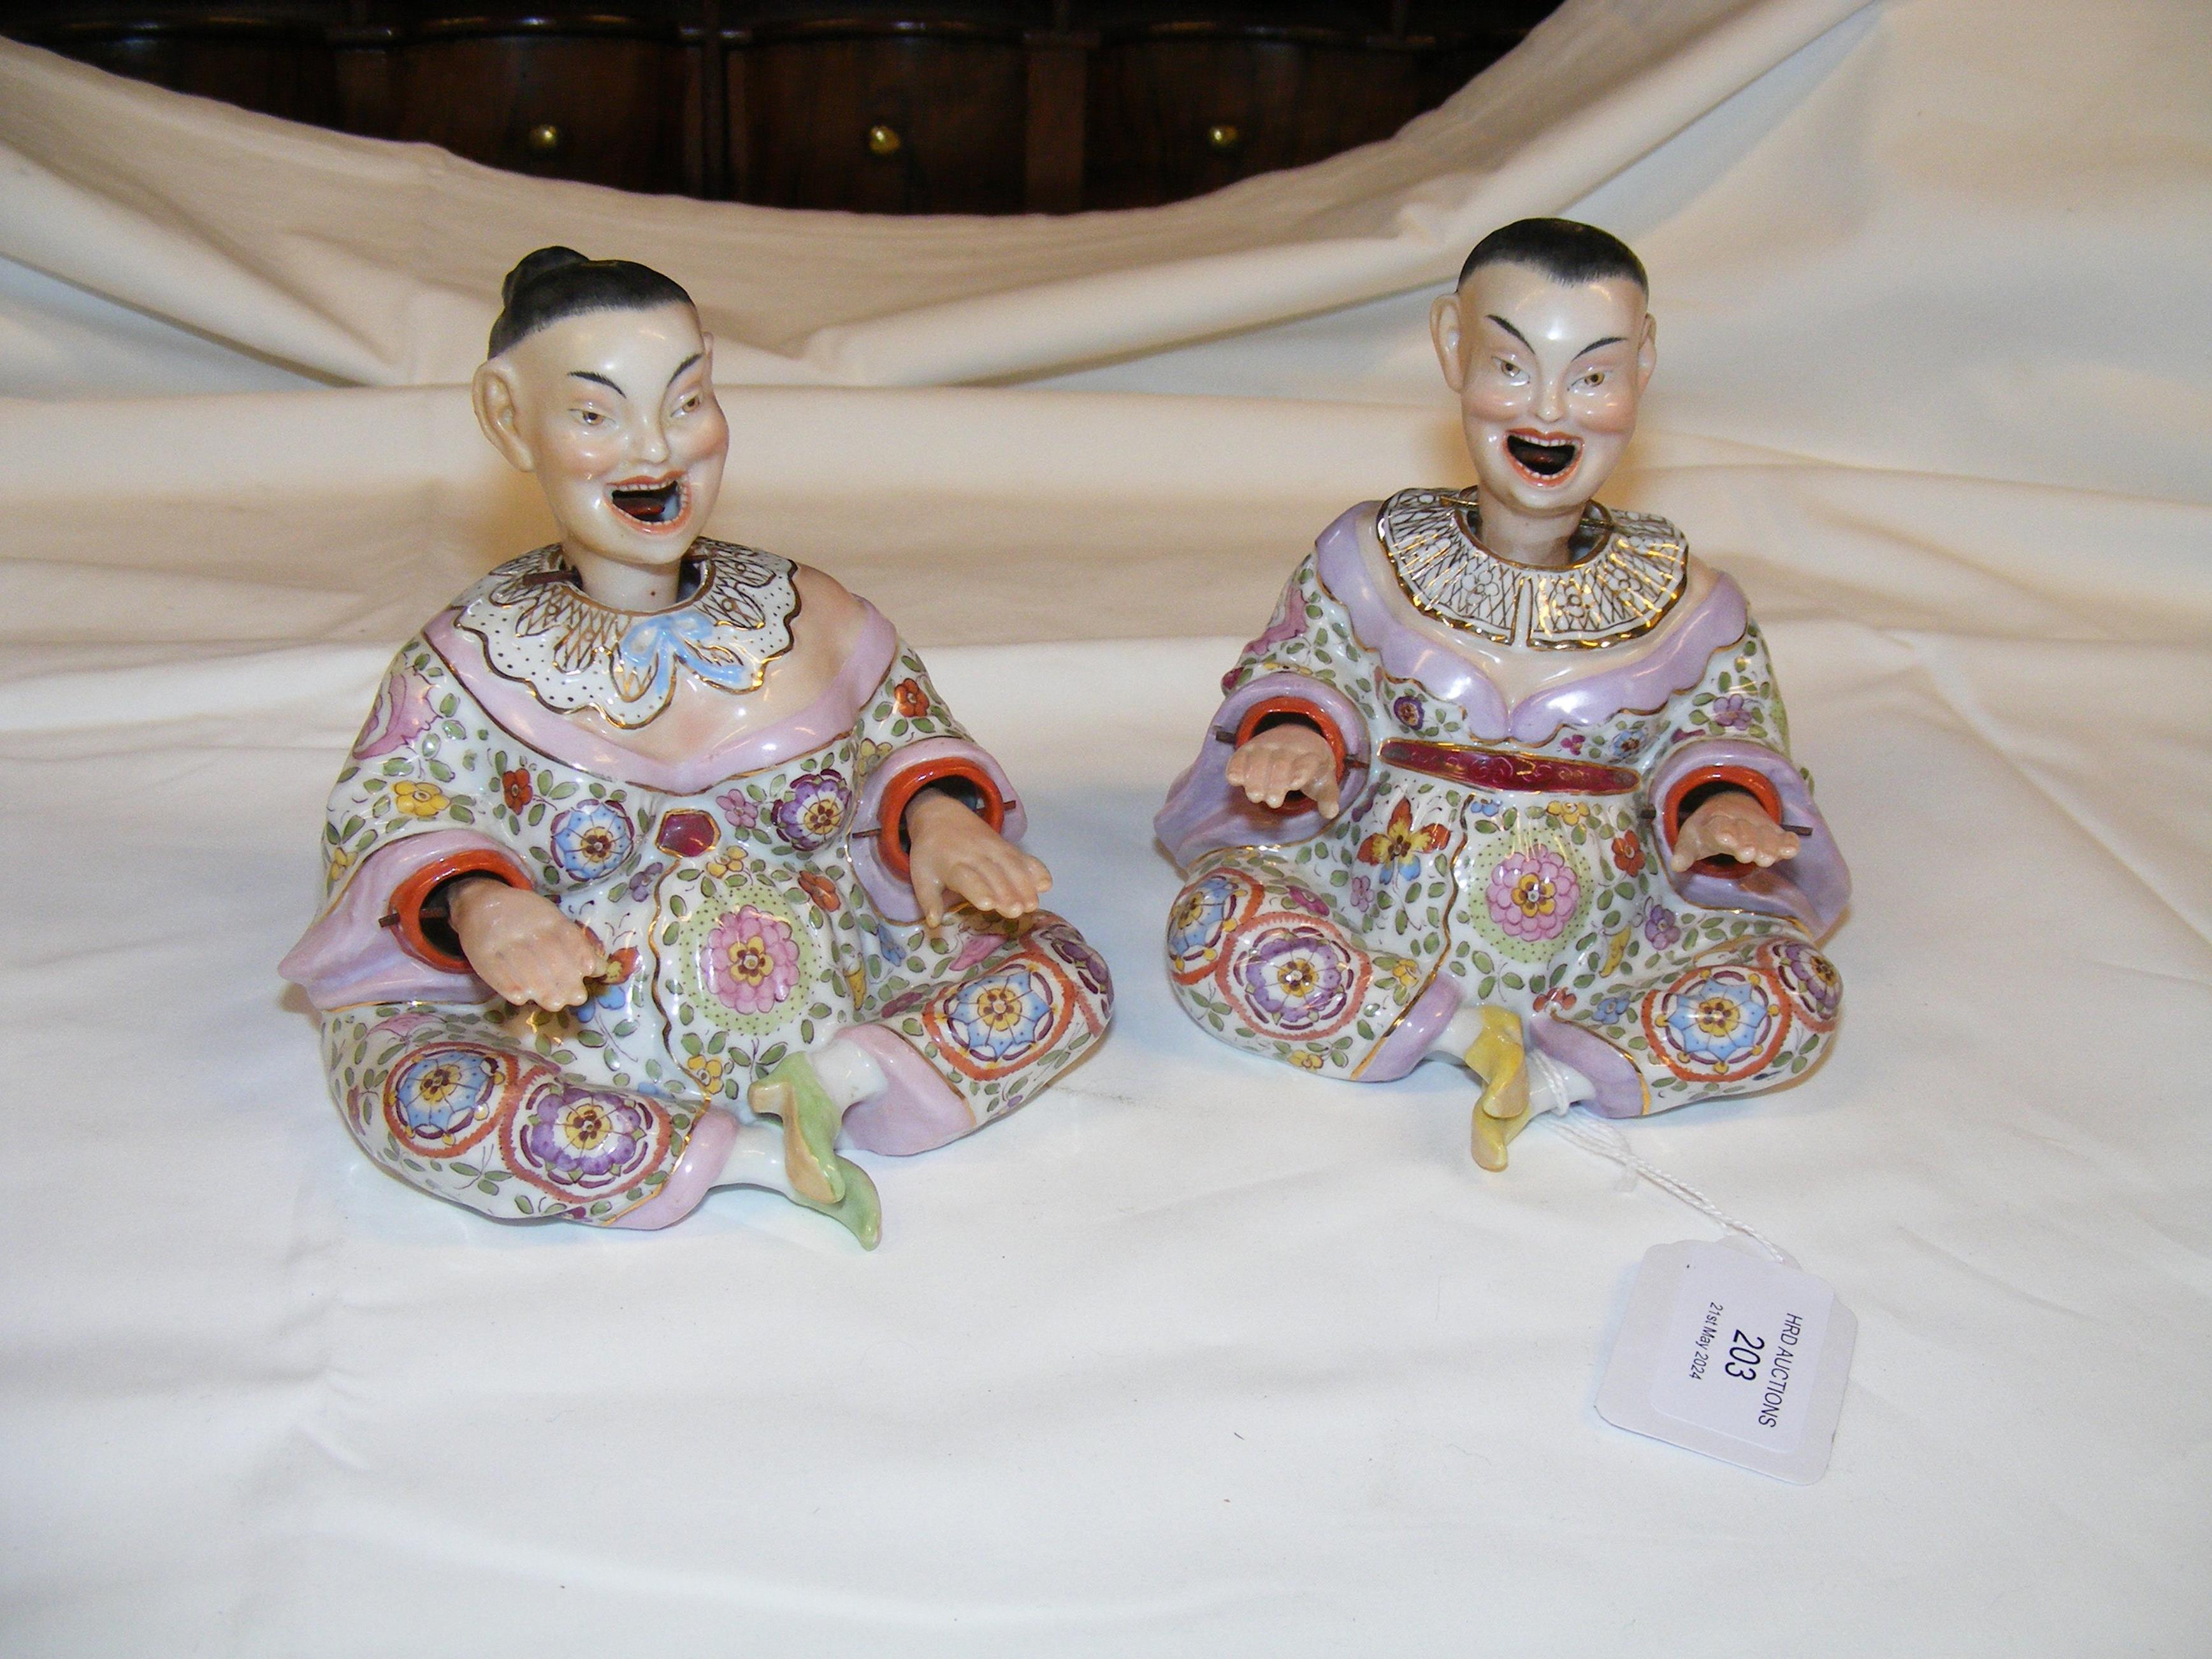 A pair of antique Chinese ceramic wedding figures